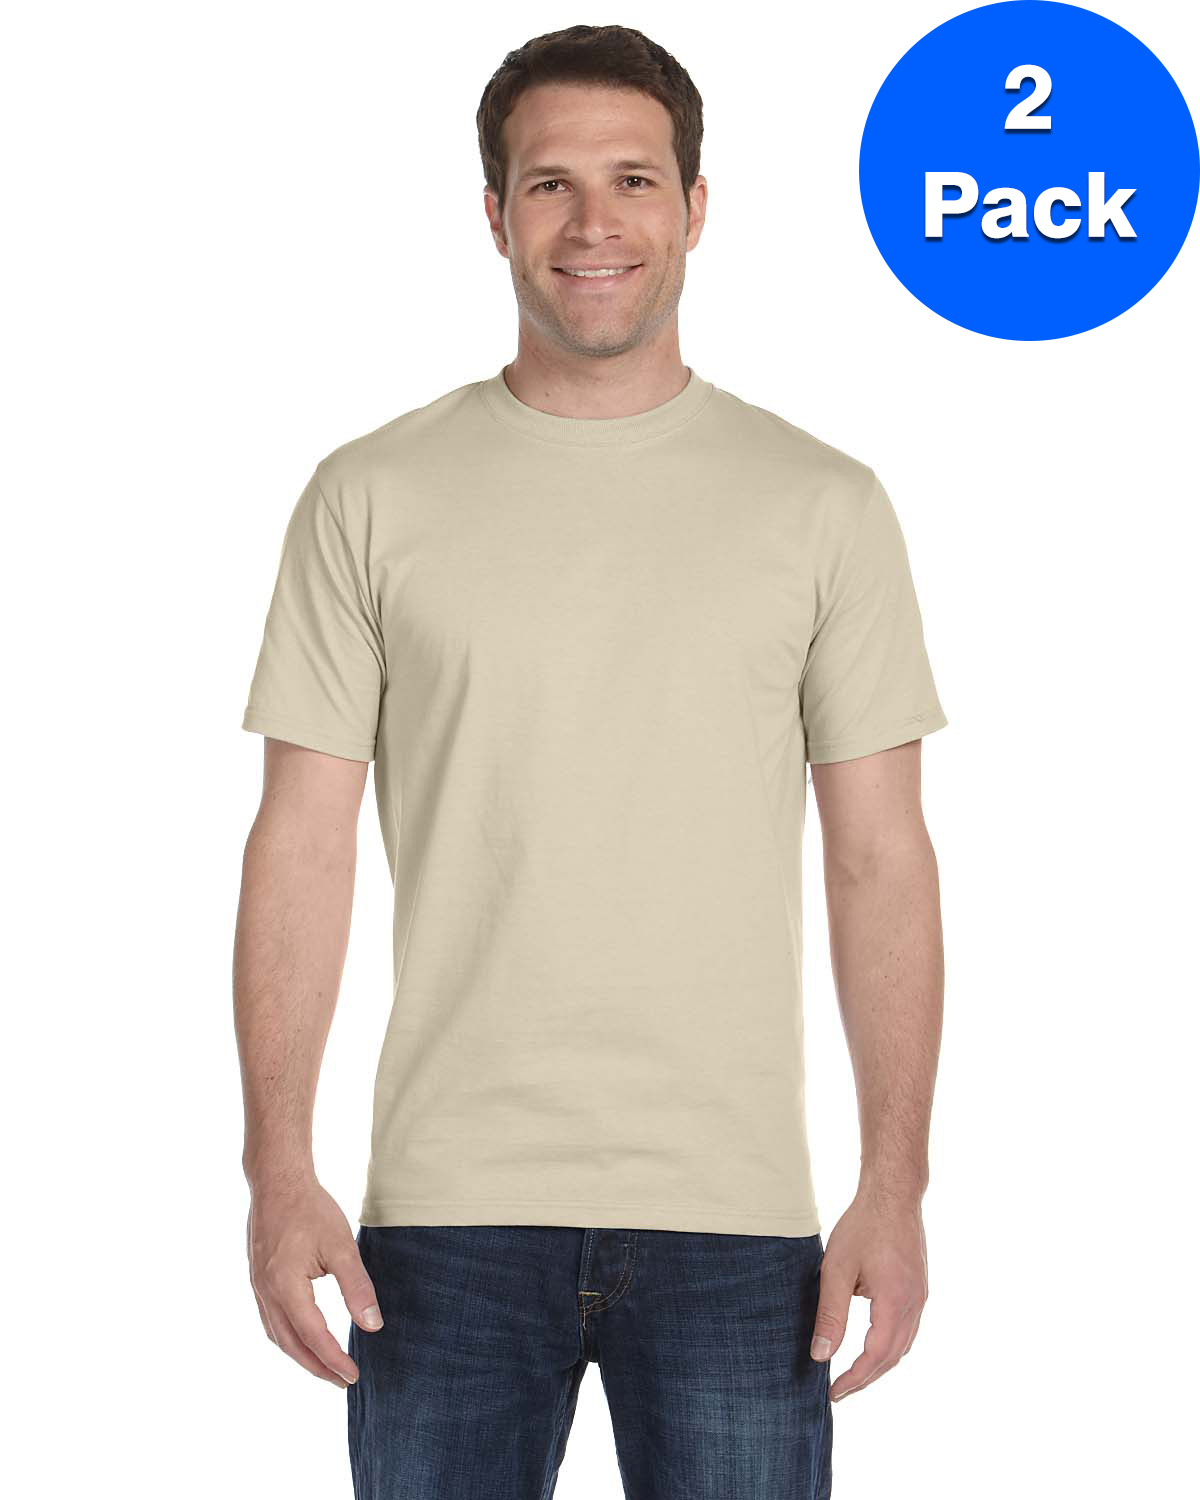 Mens 5.2 oz. ComfortSoft Cotton T-Shirt 5280 (2 PACK) - image 1 of 1